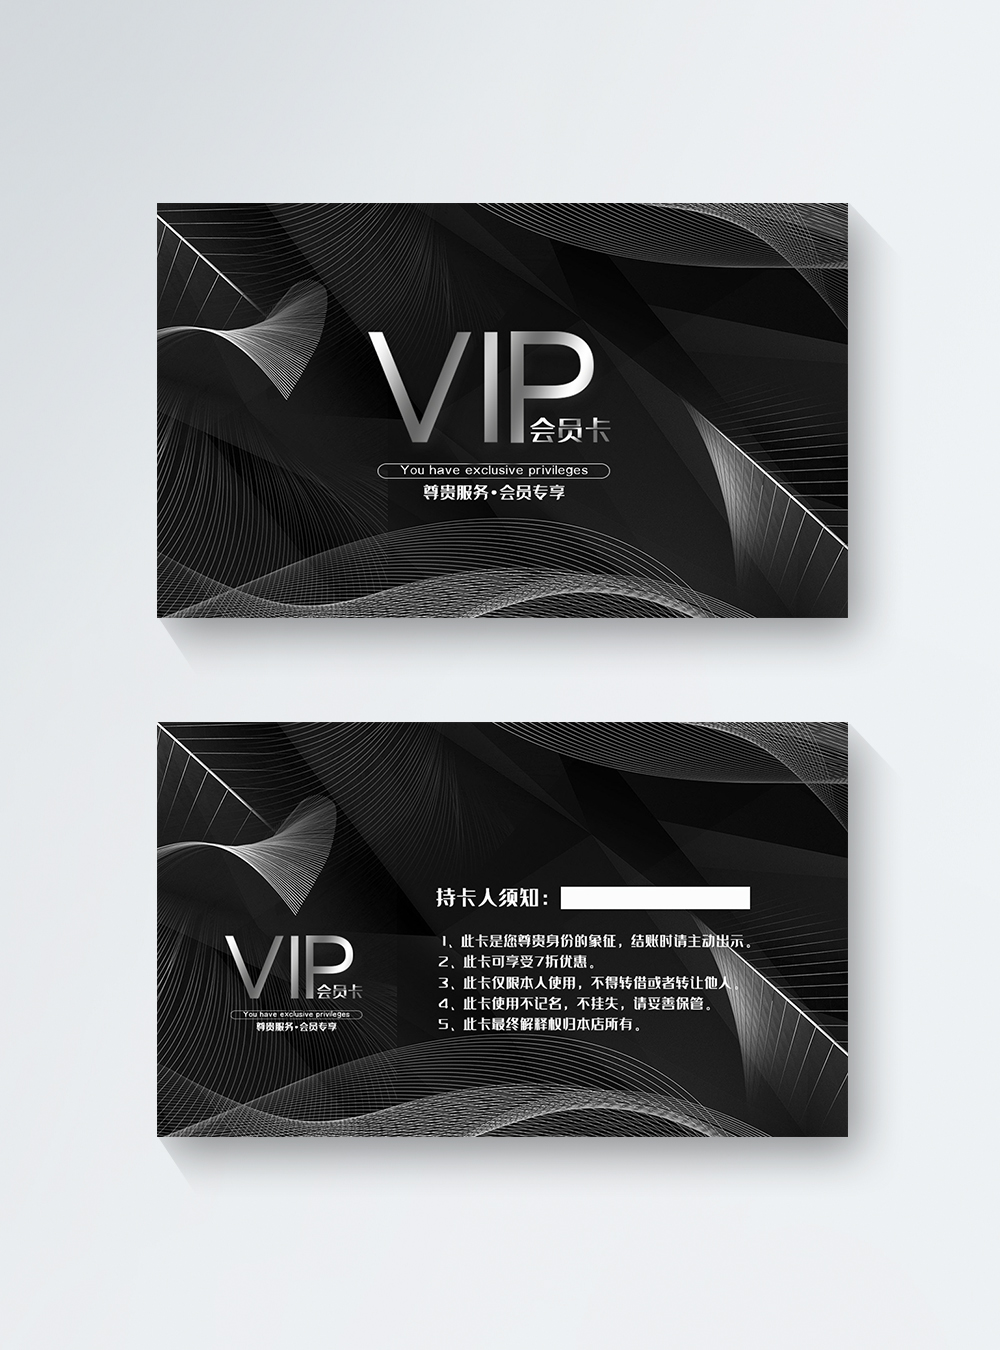 Black vip membership card template image_picture free download